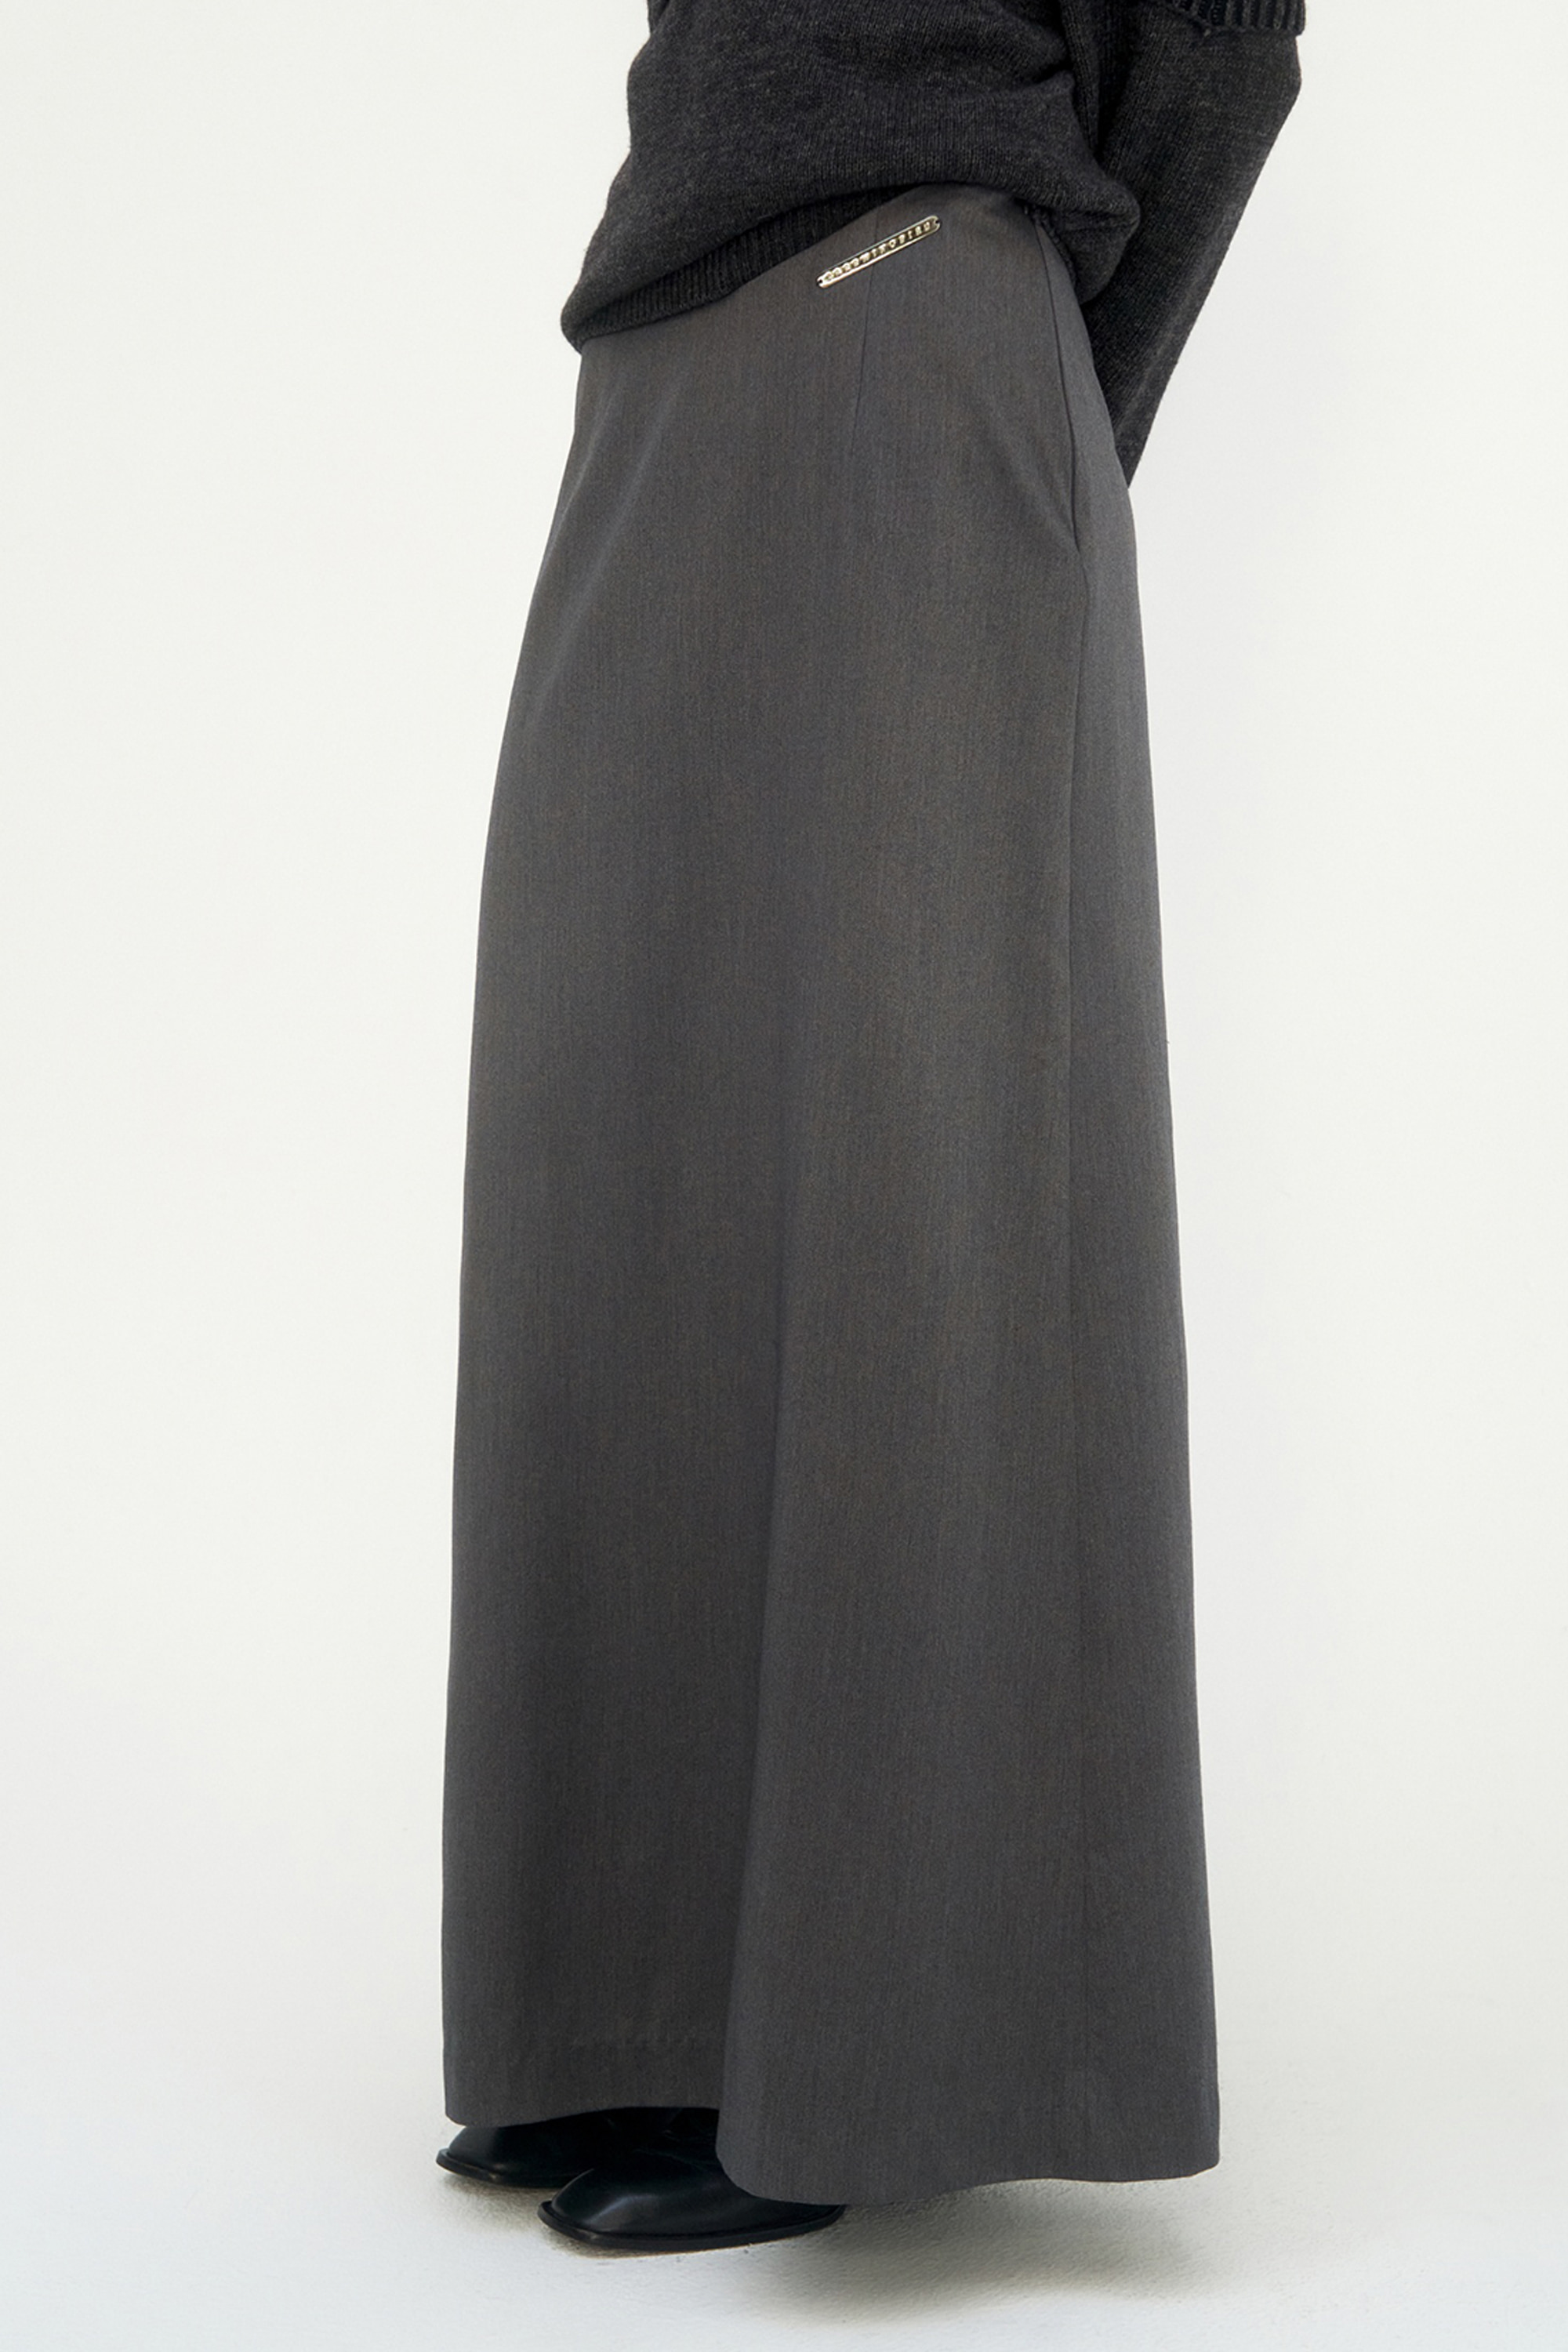 V Low-Waist Long Skirt [ Charcoal ]